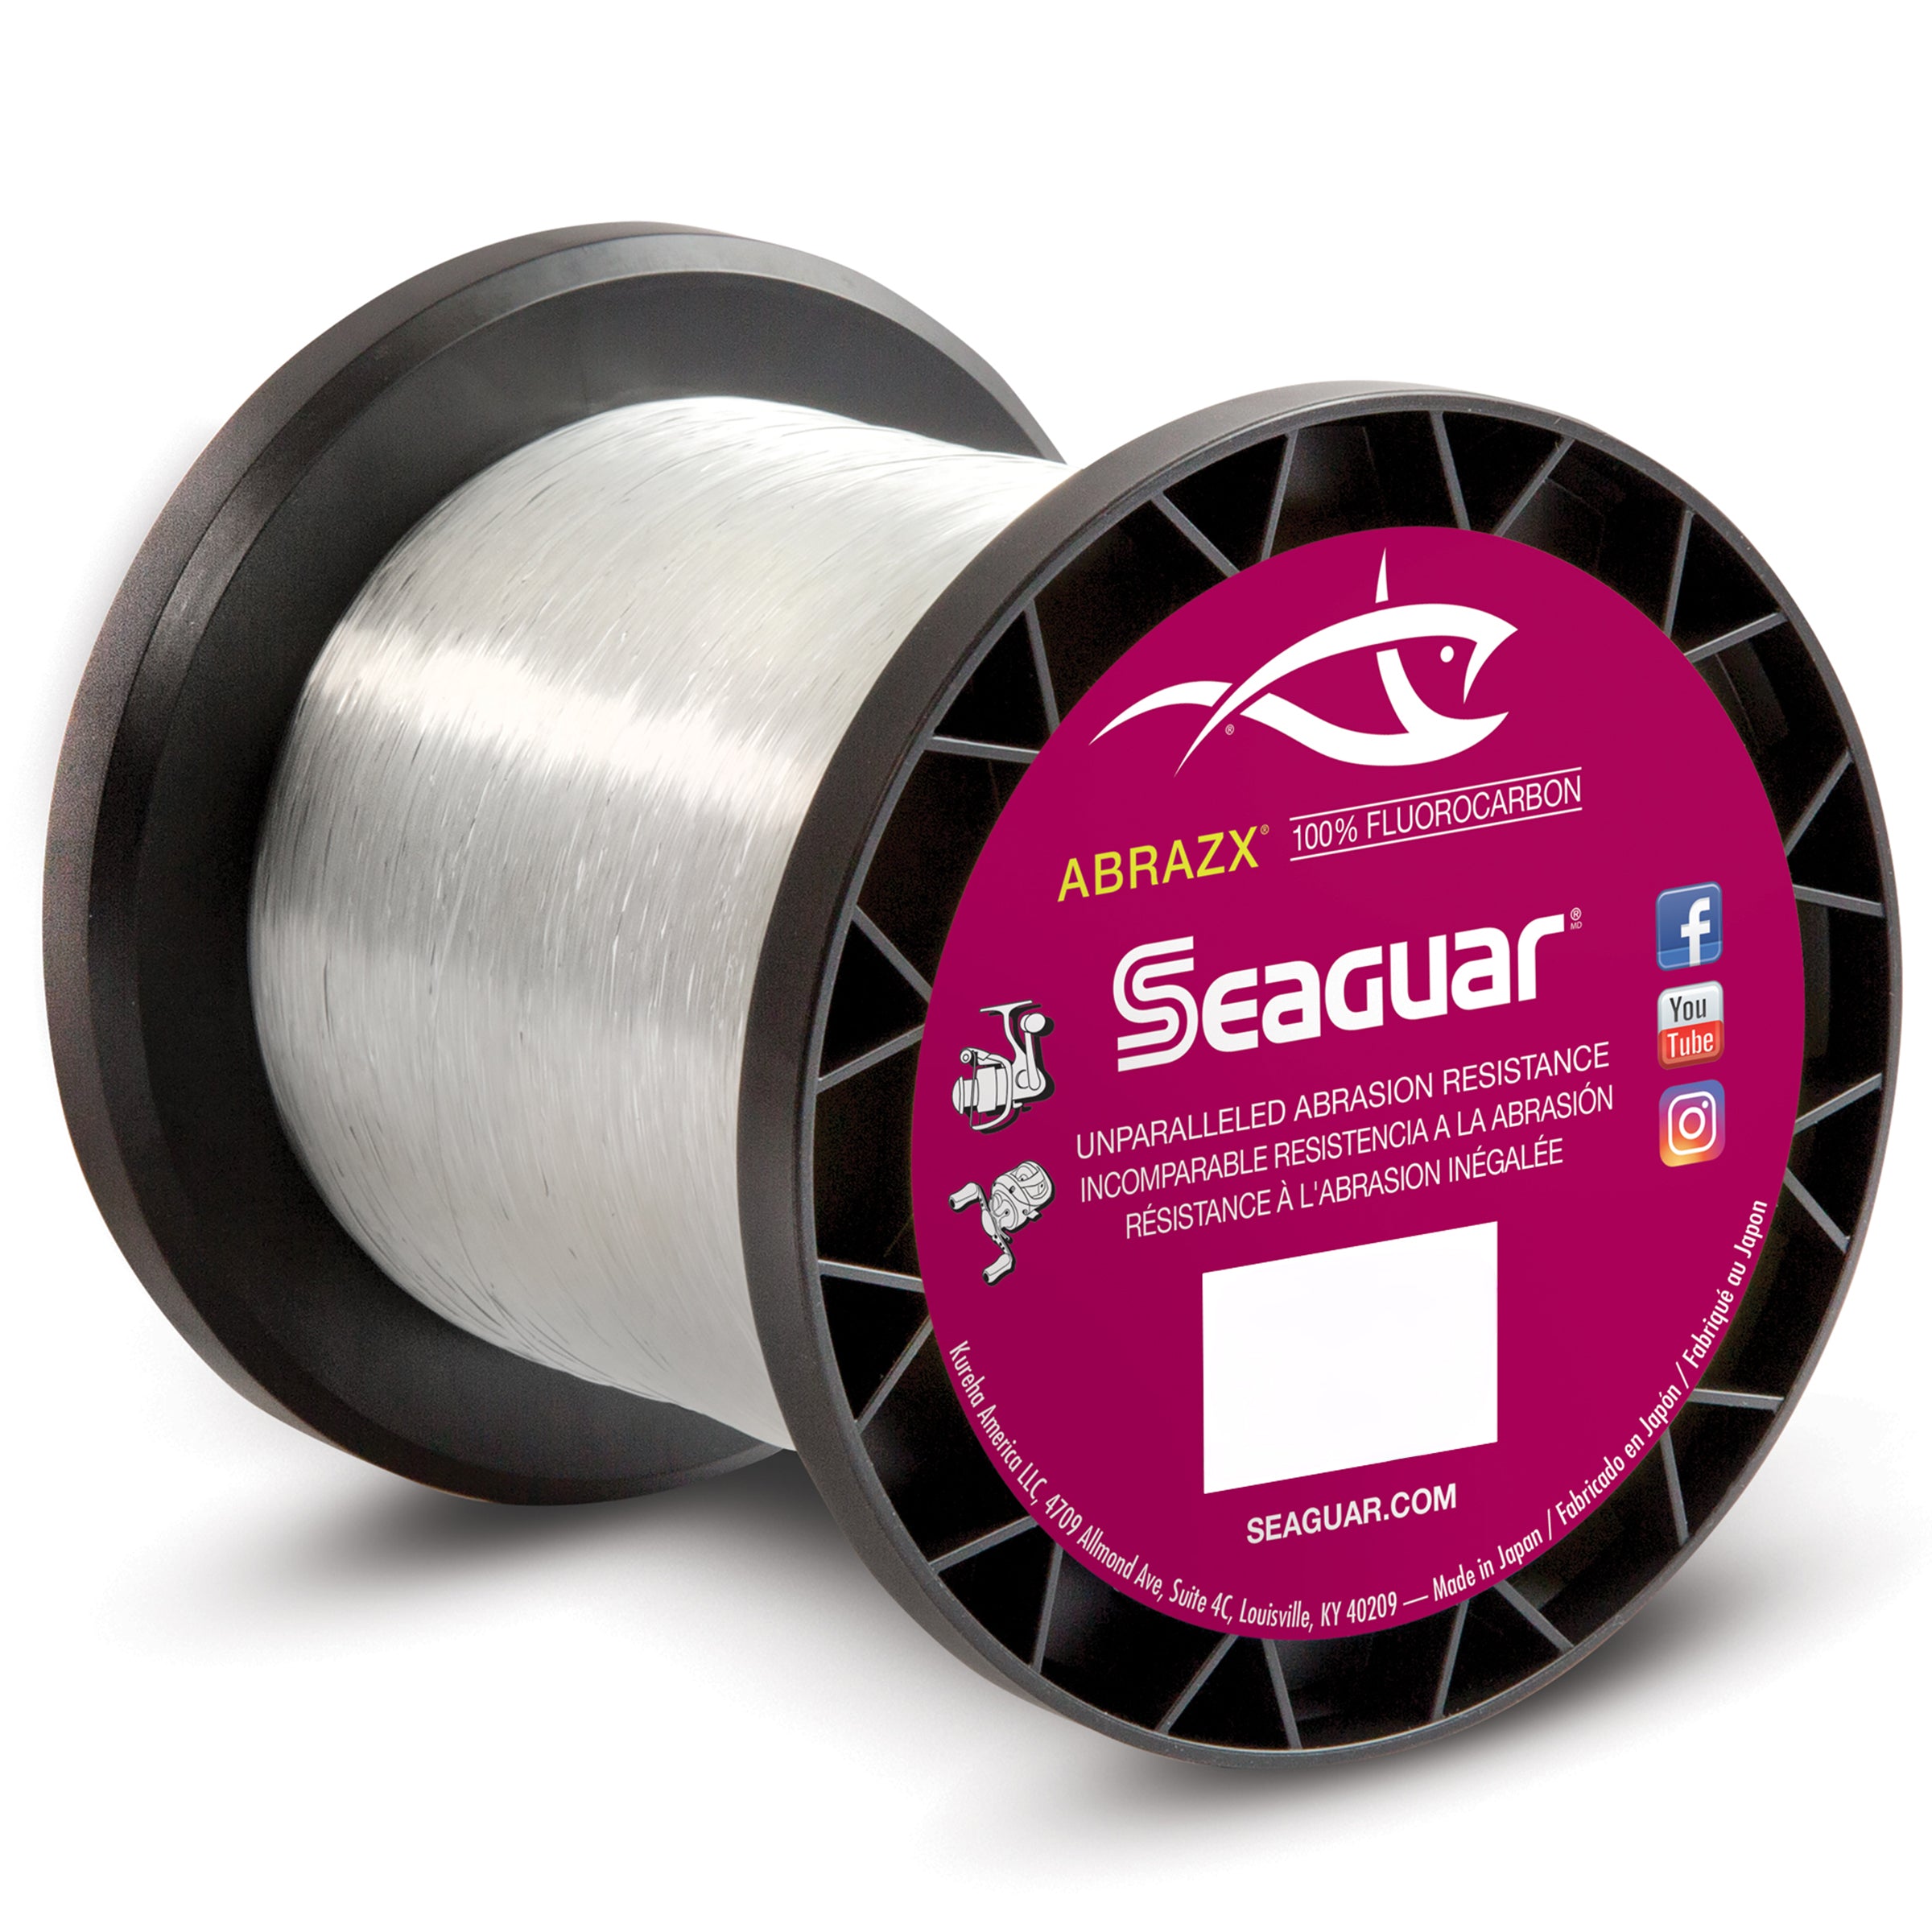 Seaguar Seaquar Invizx Fluorocarbon Fishing Line, 1,000 Yd